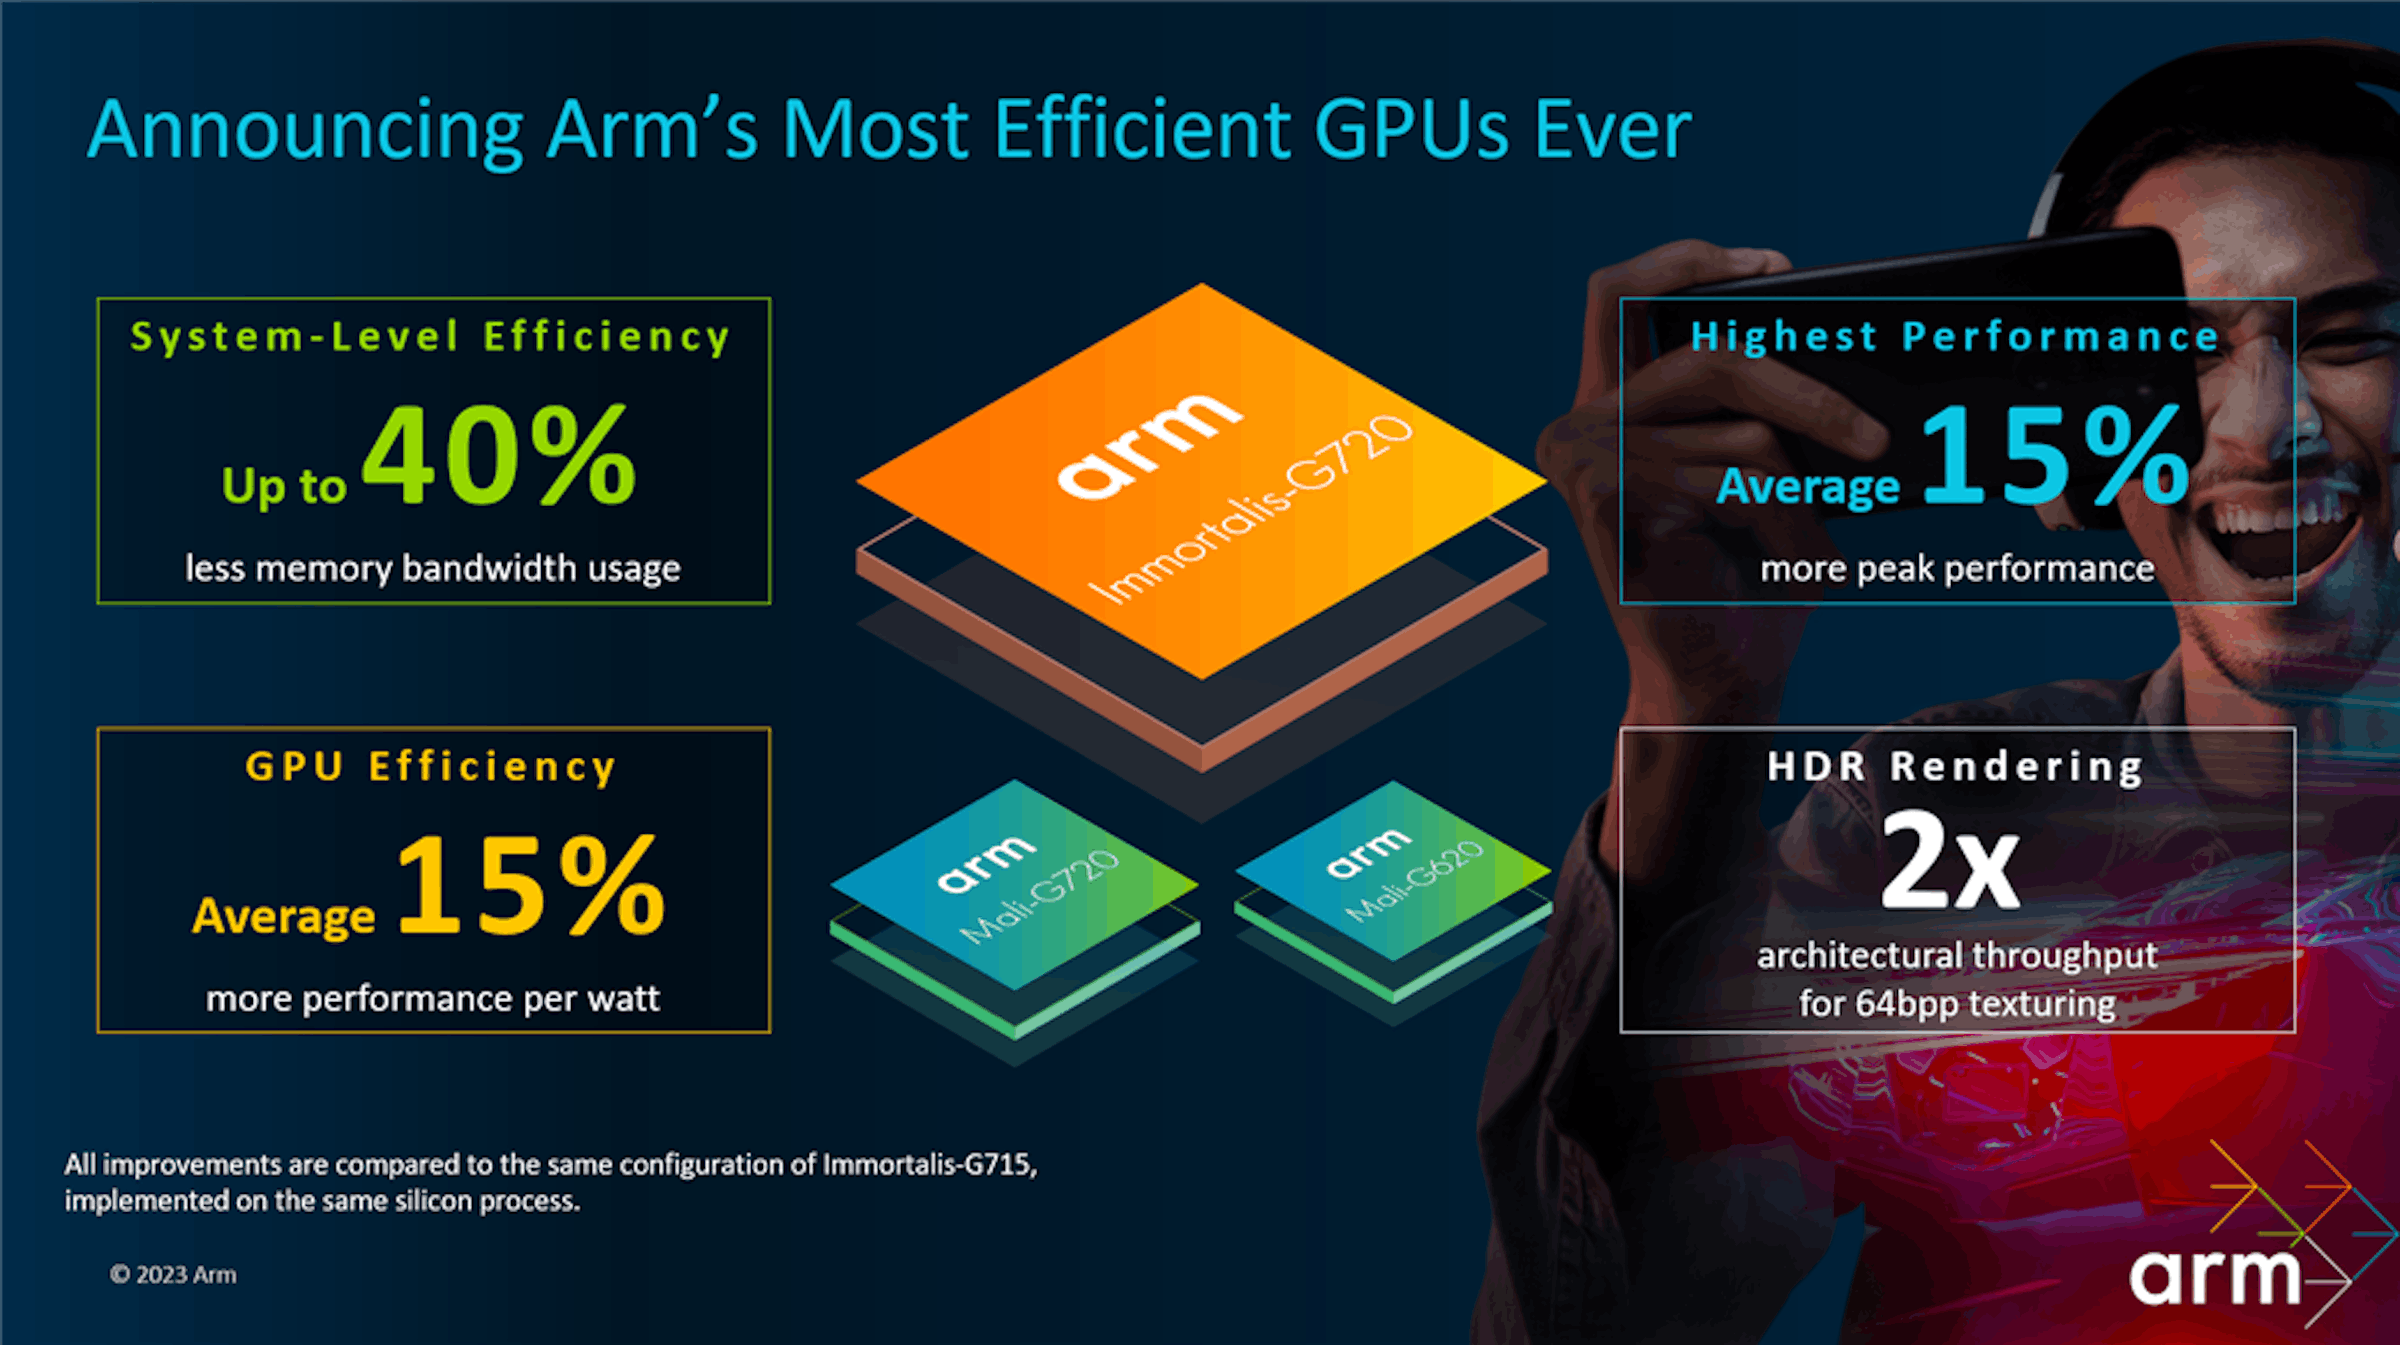 照片中提到了Announcing Arm's Most Efficient GPUs Ever、System-Level Efficiency、Up to 40%，跟武器控股有關，包含了平面設計、ARM Cortex-X4、設計、中央處理器、圖形處理單元